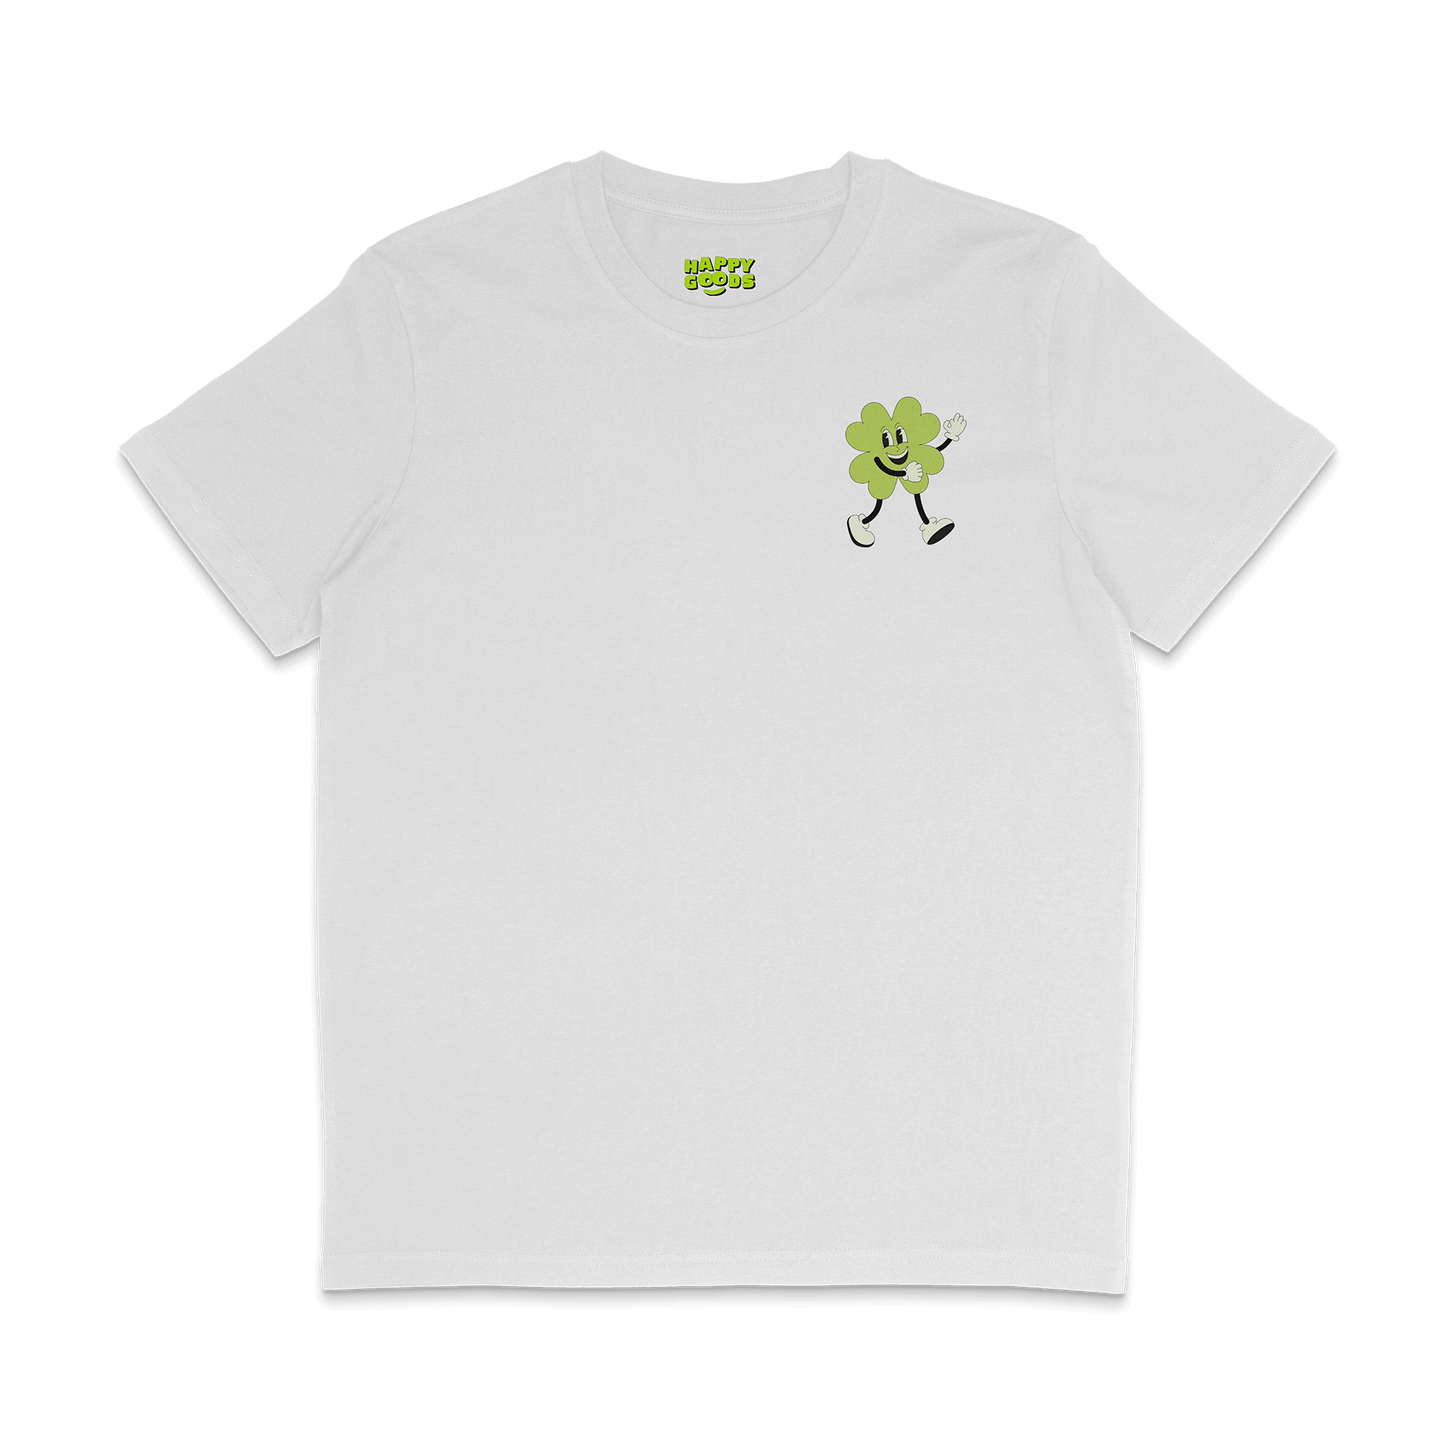 I am lucky affirmation t-shirt, walking four leaf clover mascot illustration